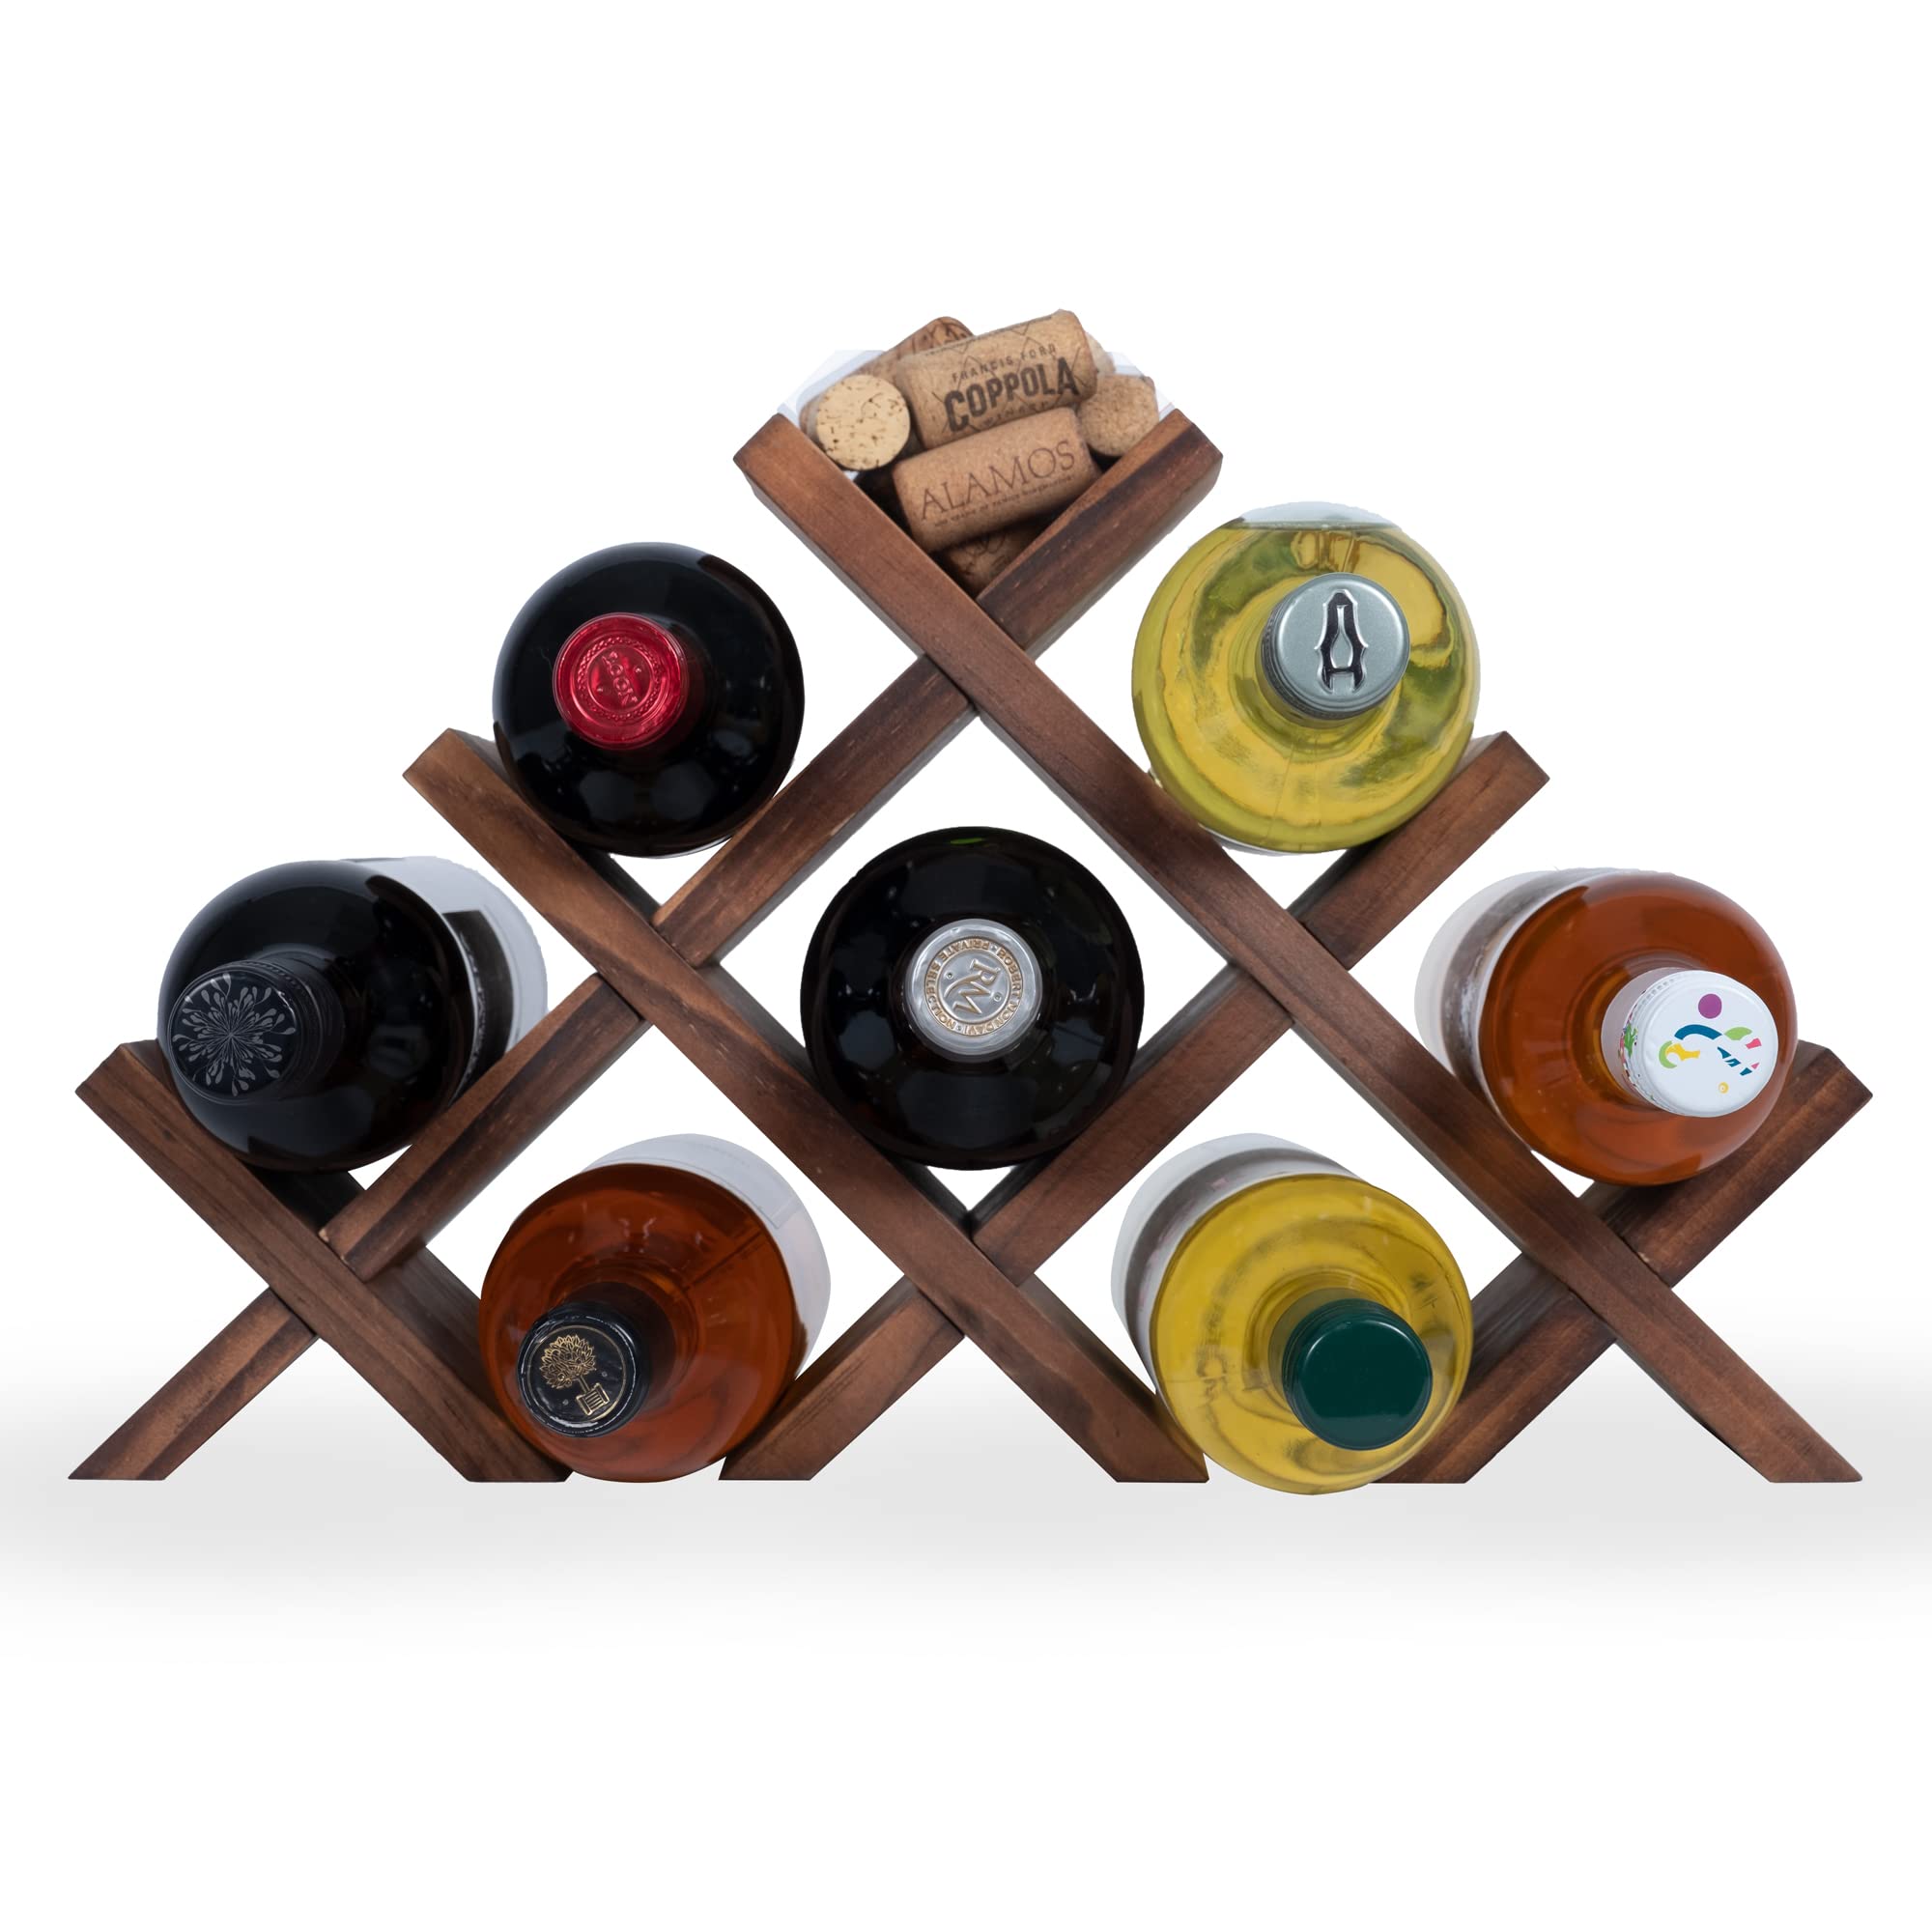 Rustic State Alella Countertop Wood Wine Rack for 8 Bottles Holder and Cork Storage Tabletop Butterfly Sleek Design Freestanding Organizer - Home, Kitchen, Dining Room Bar Décor - Walnut